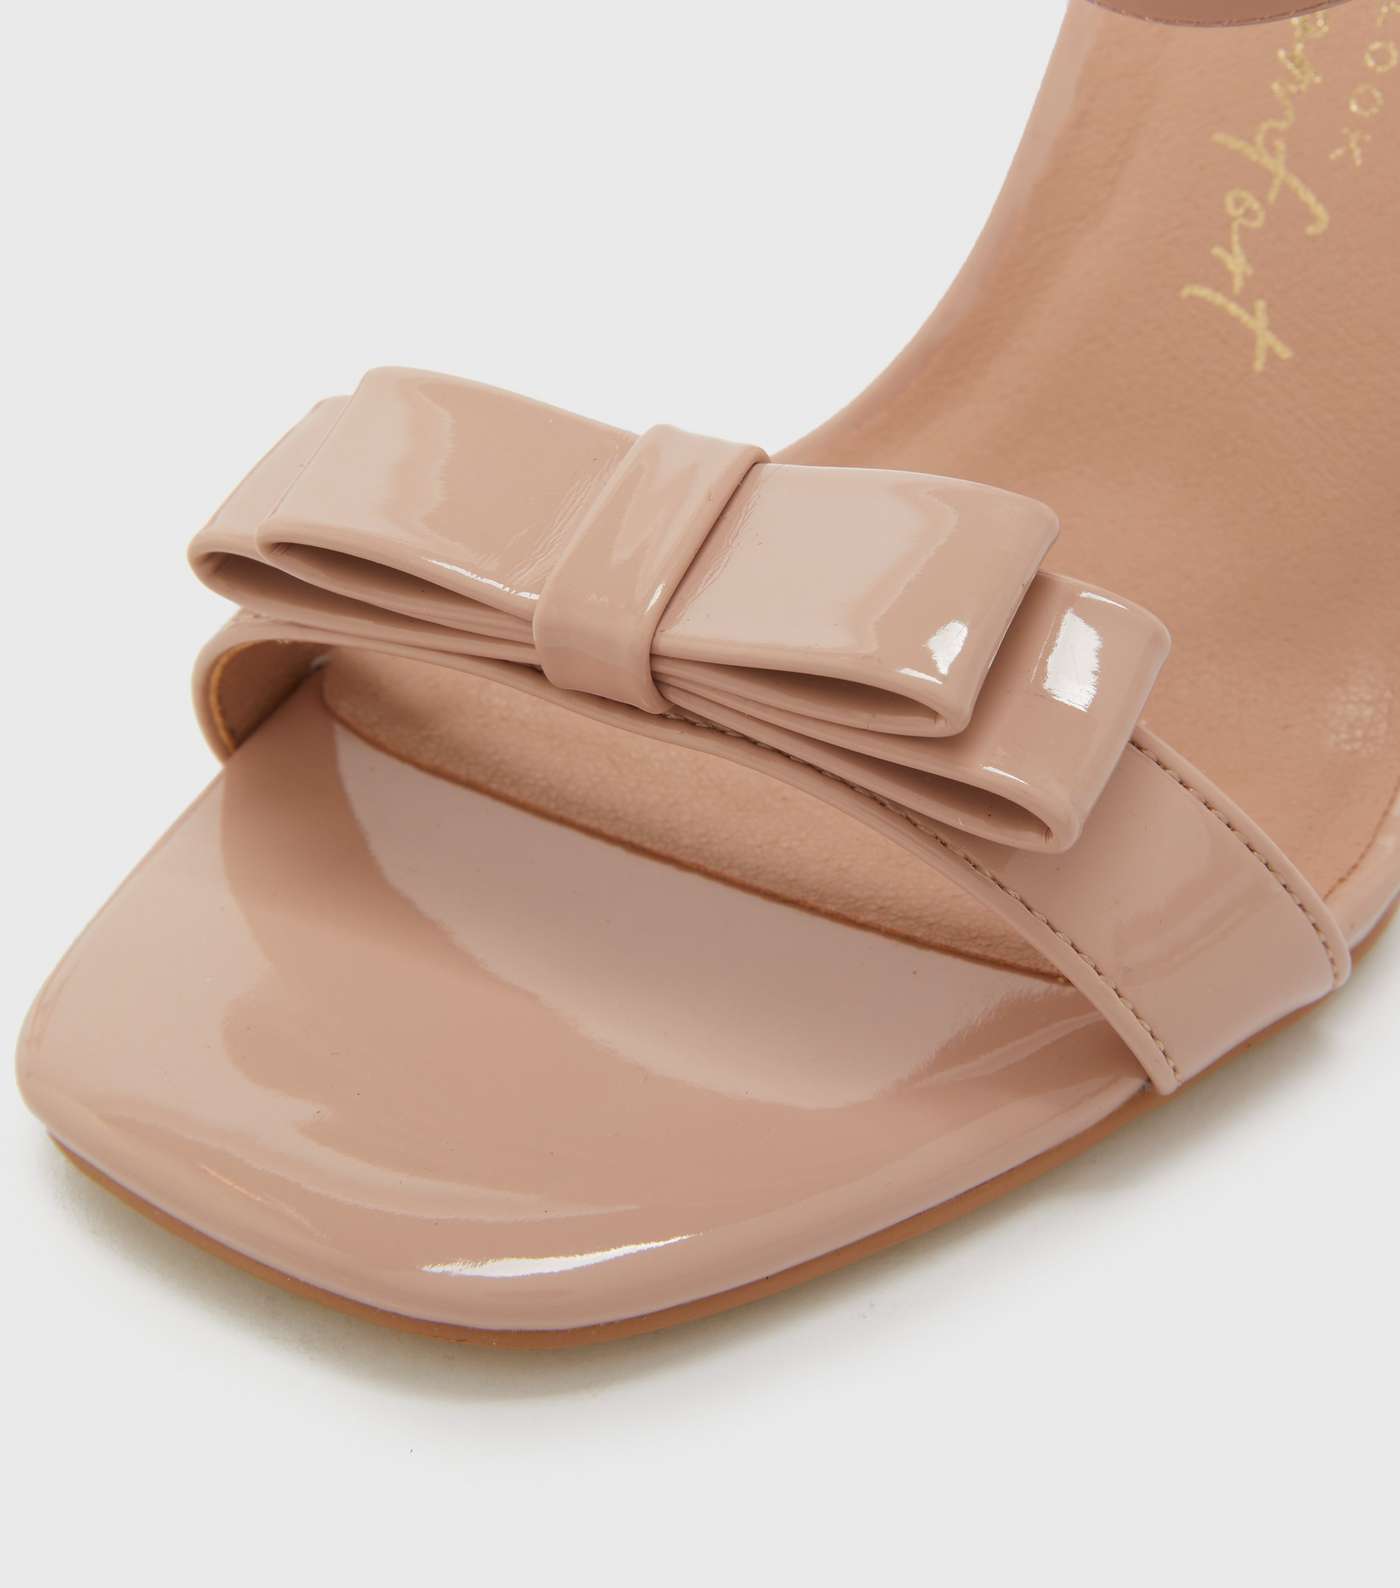 Wide Fit Cream Patent Bow Stiletto Heel Sandals Image 4